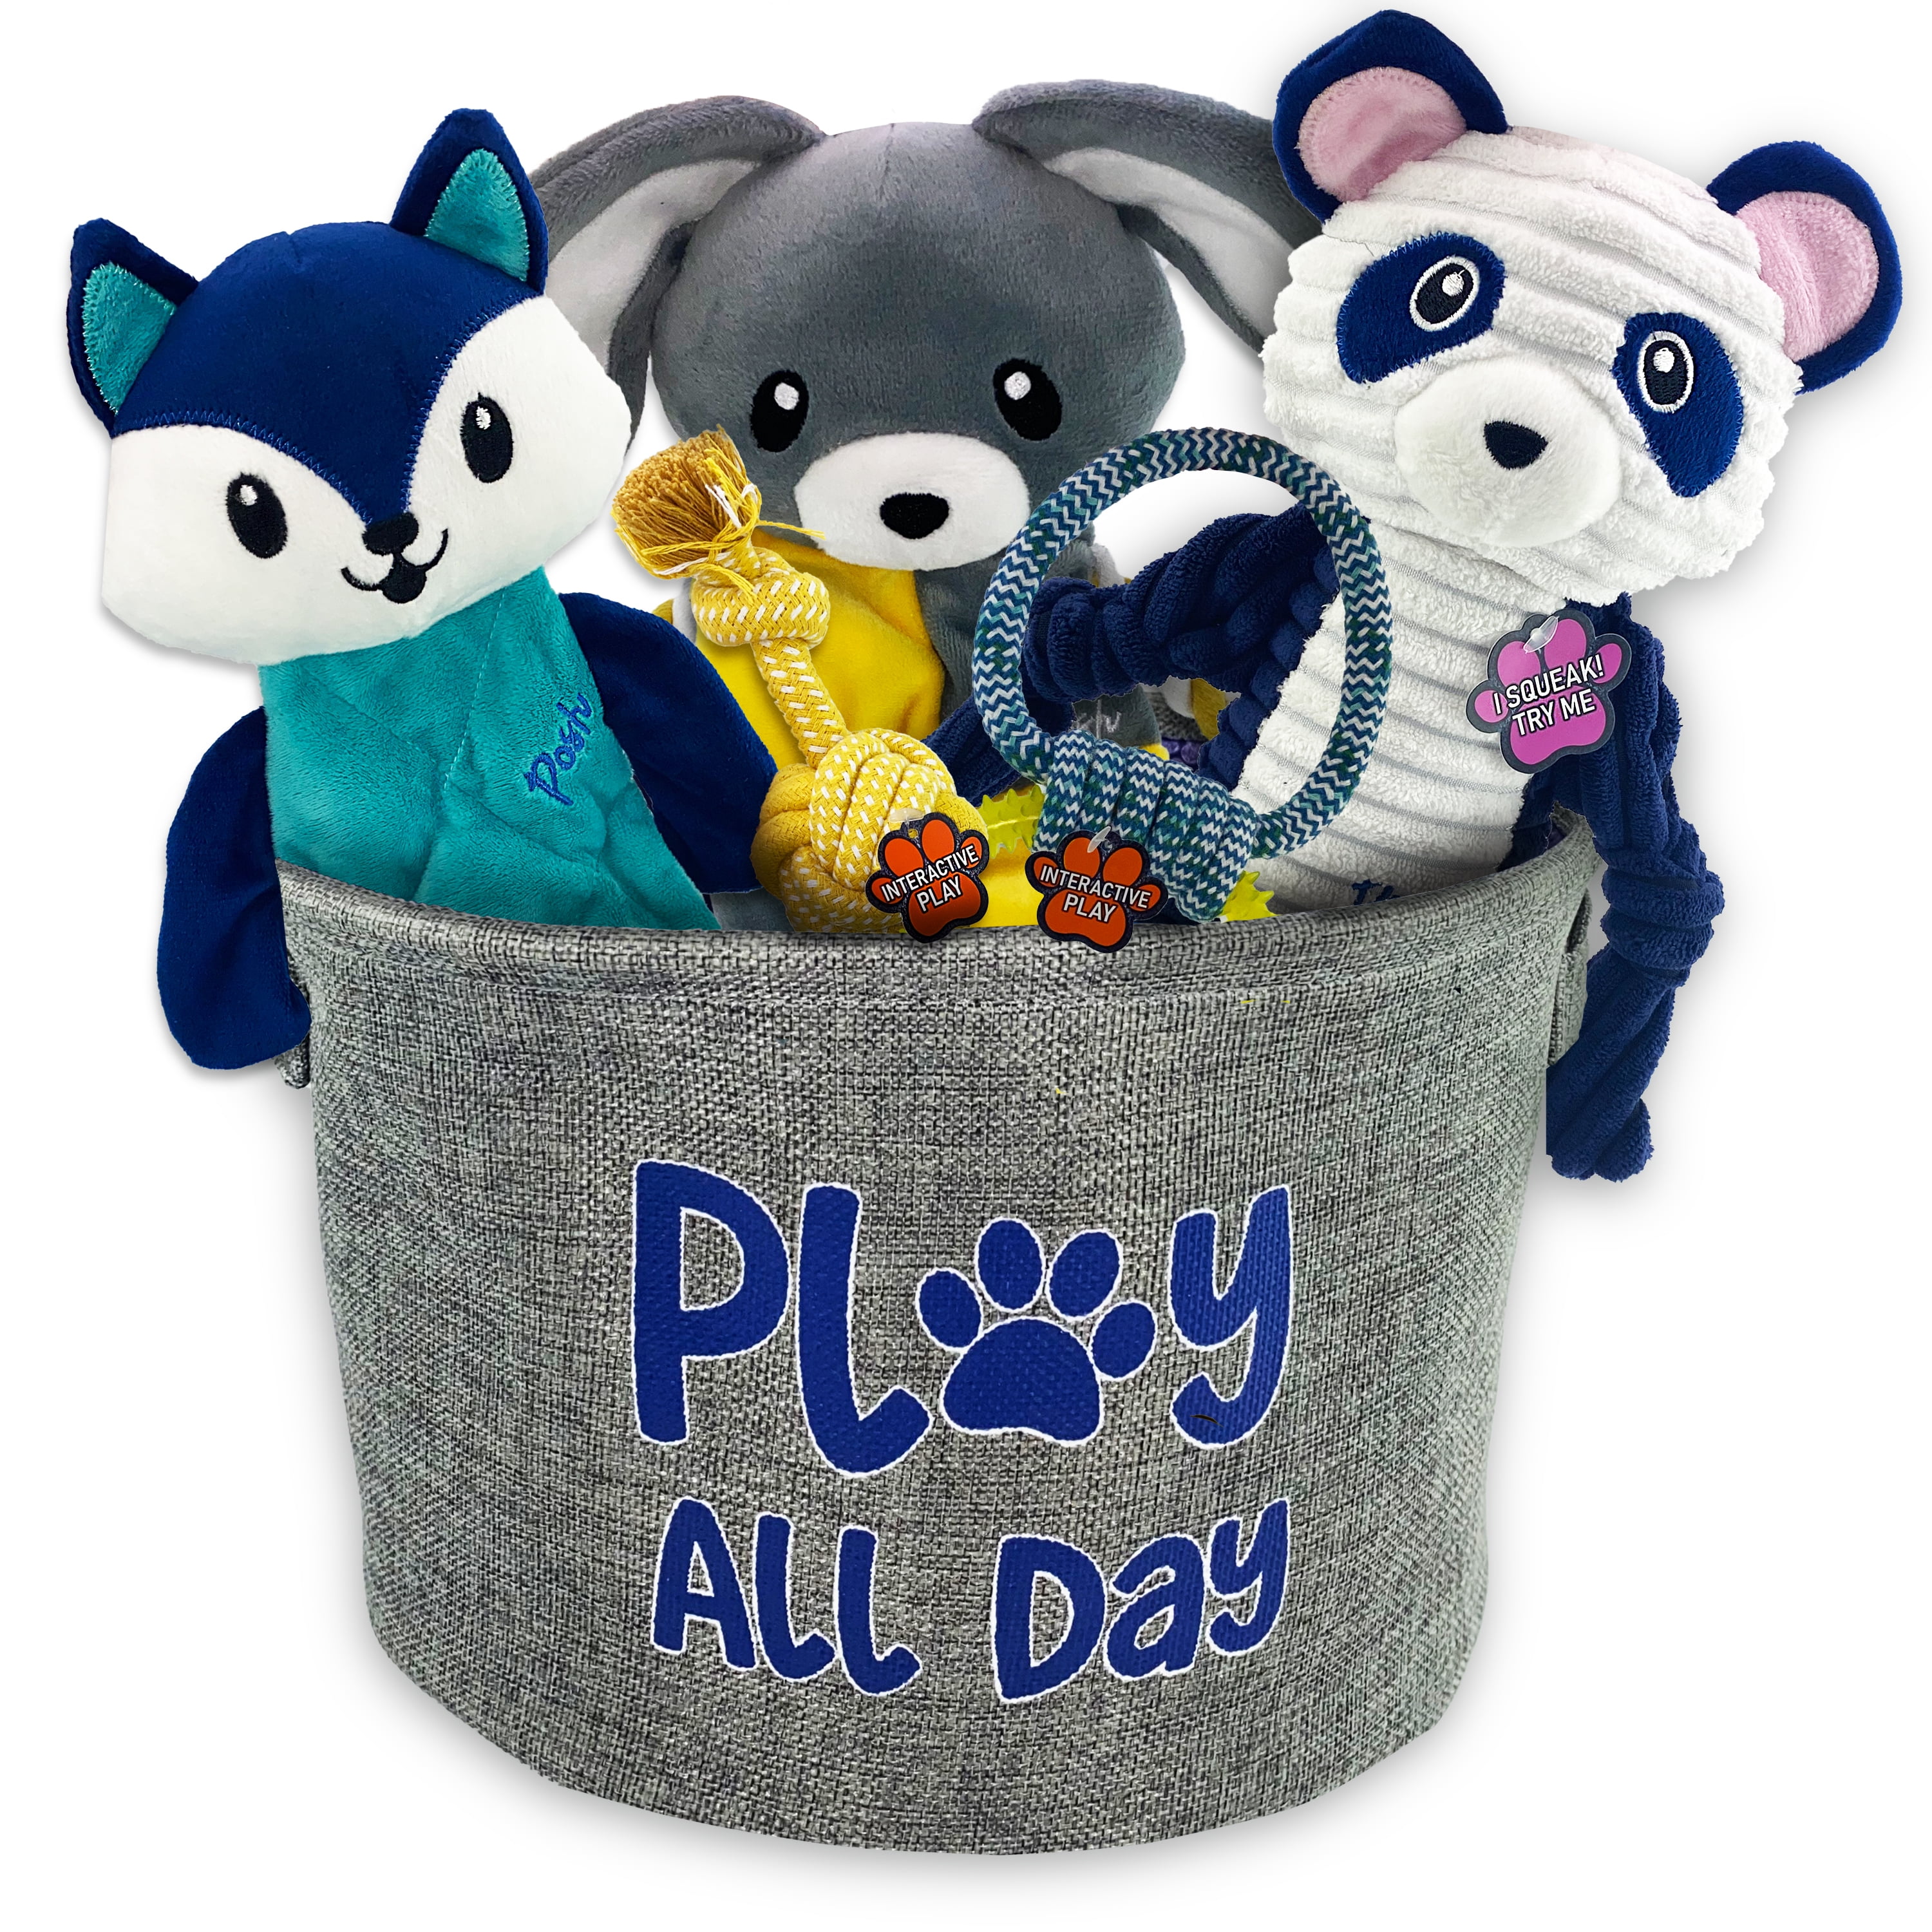 6-Piece Posh Paws Dog Toys & "Play All Day" Storage Bin Bundle Gift Set $11.49 + Free S&H w/ Walmart+ or $35+